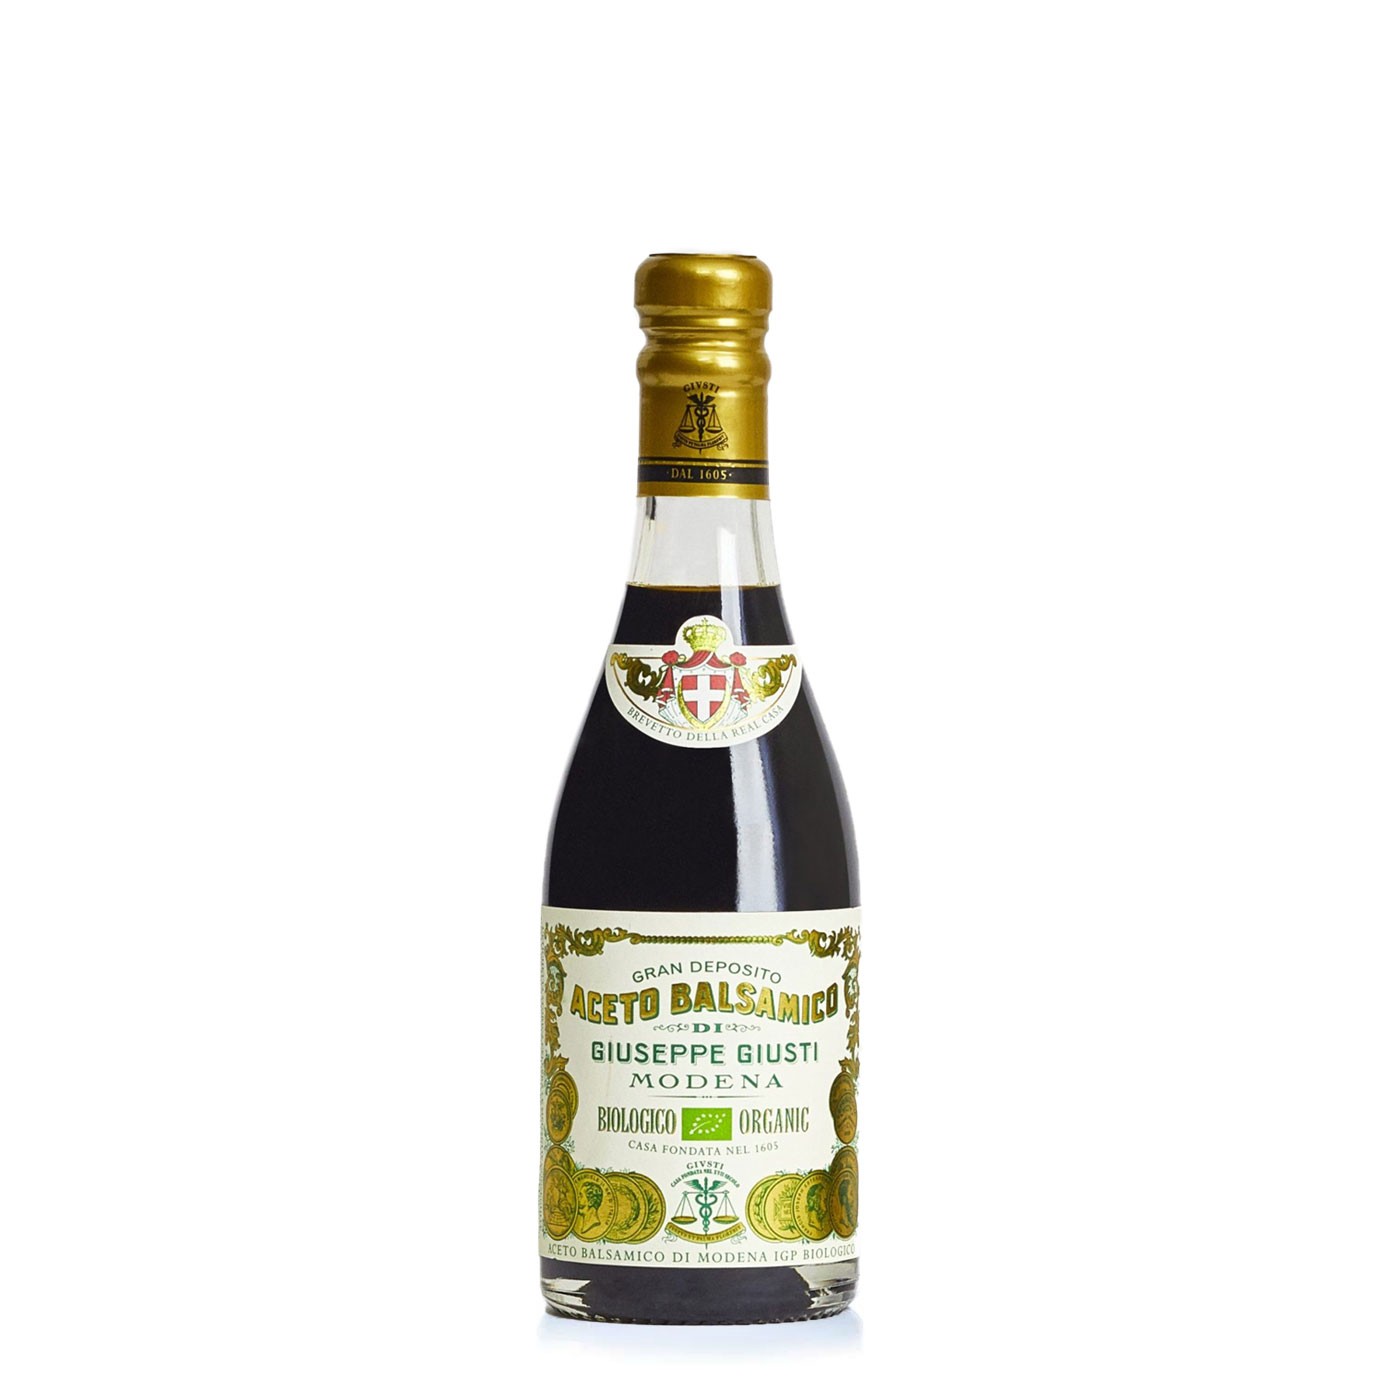 Organic Balsamic Vinegar of Modena IGP 8.45 oz